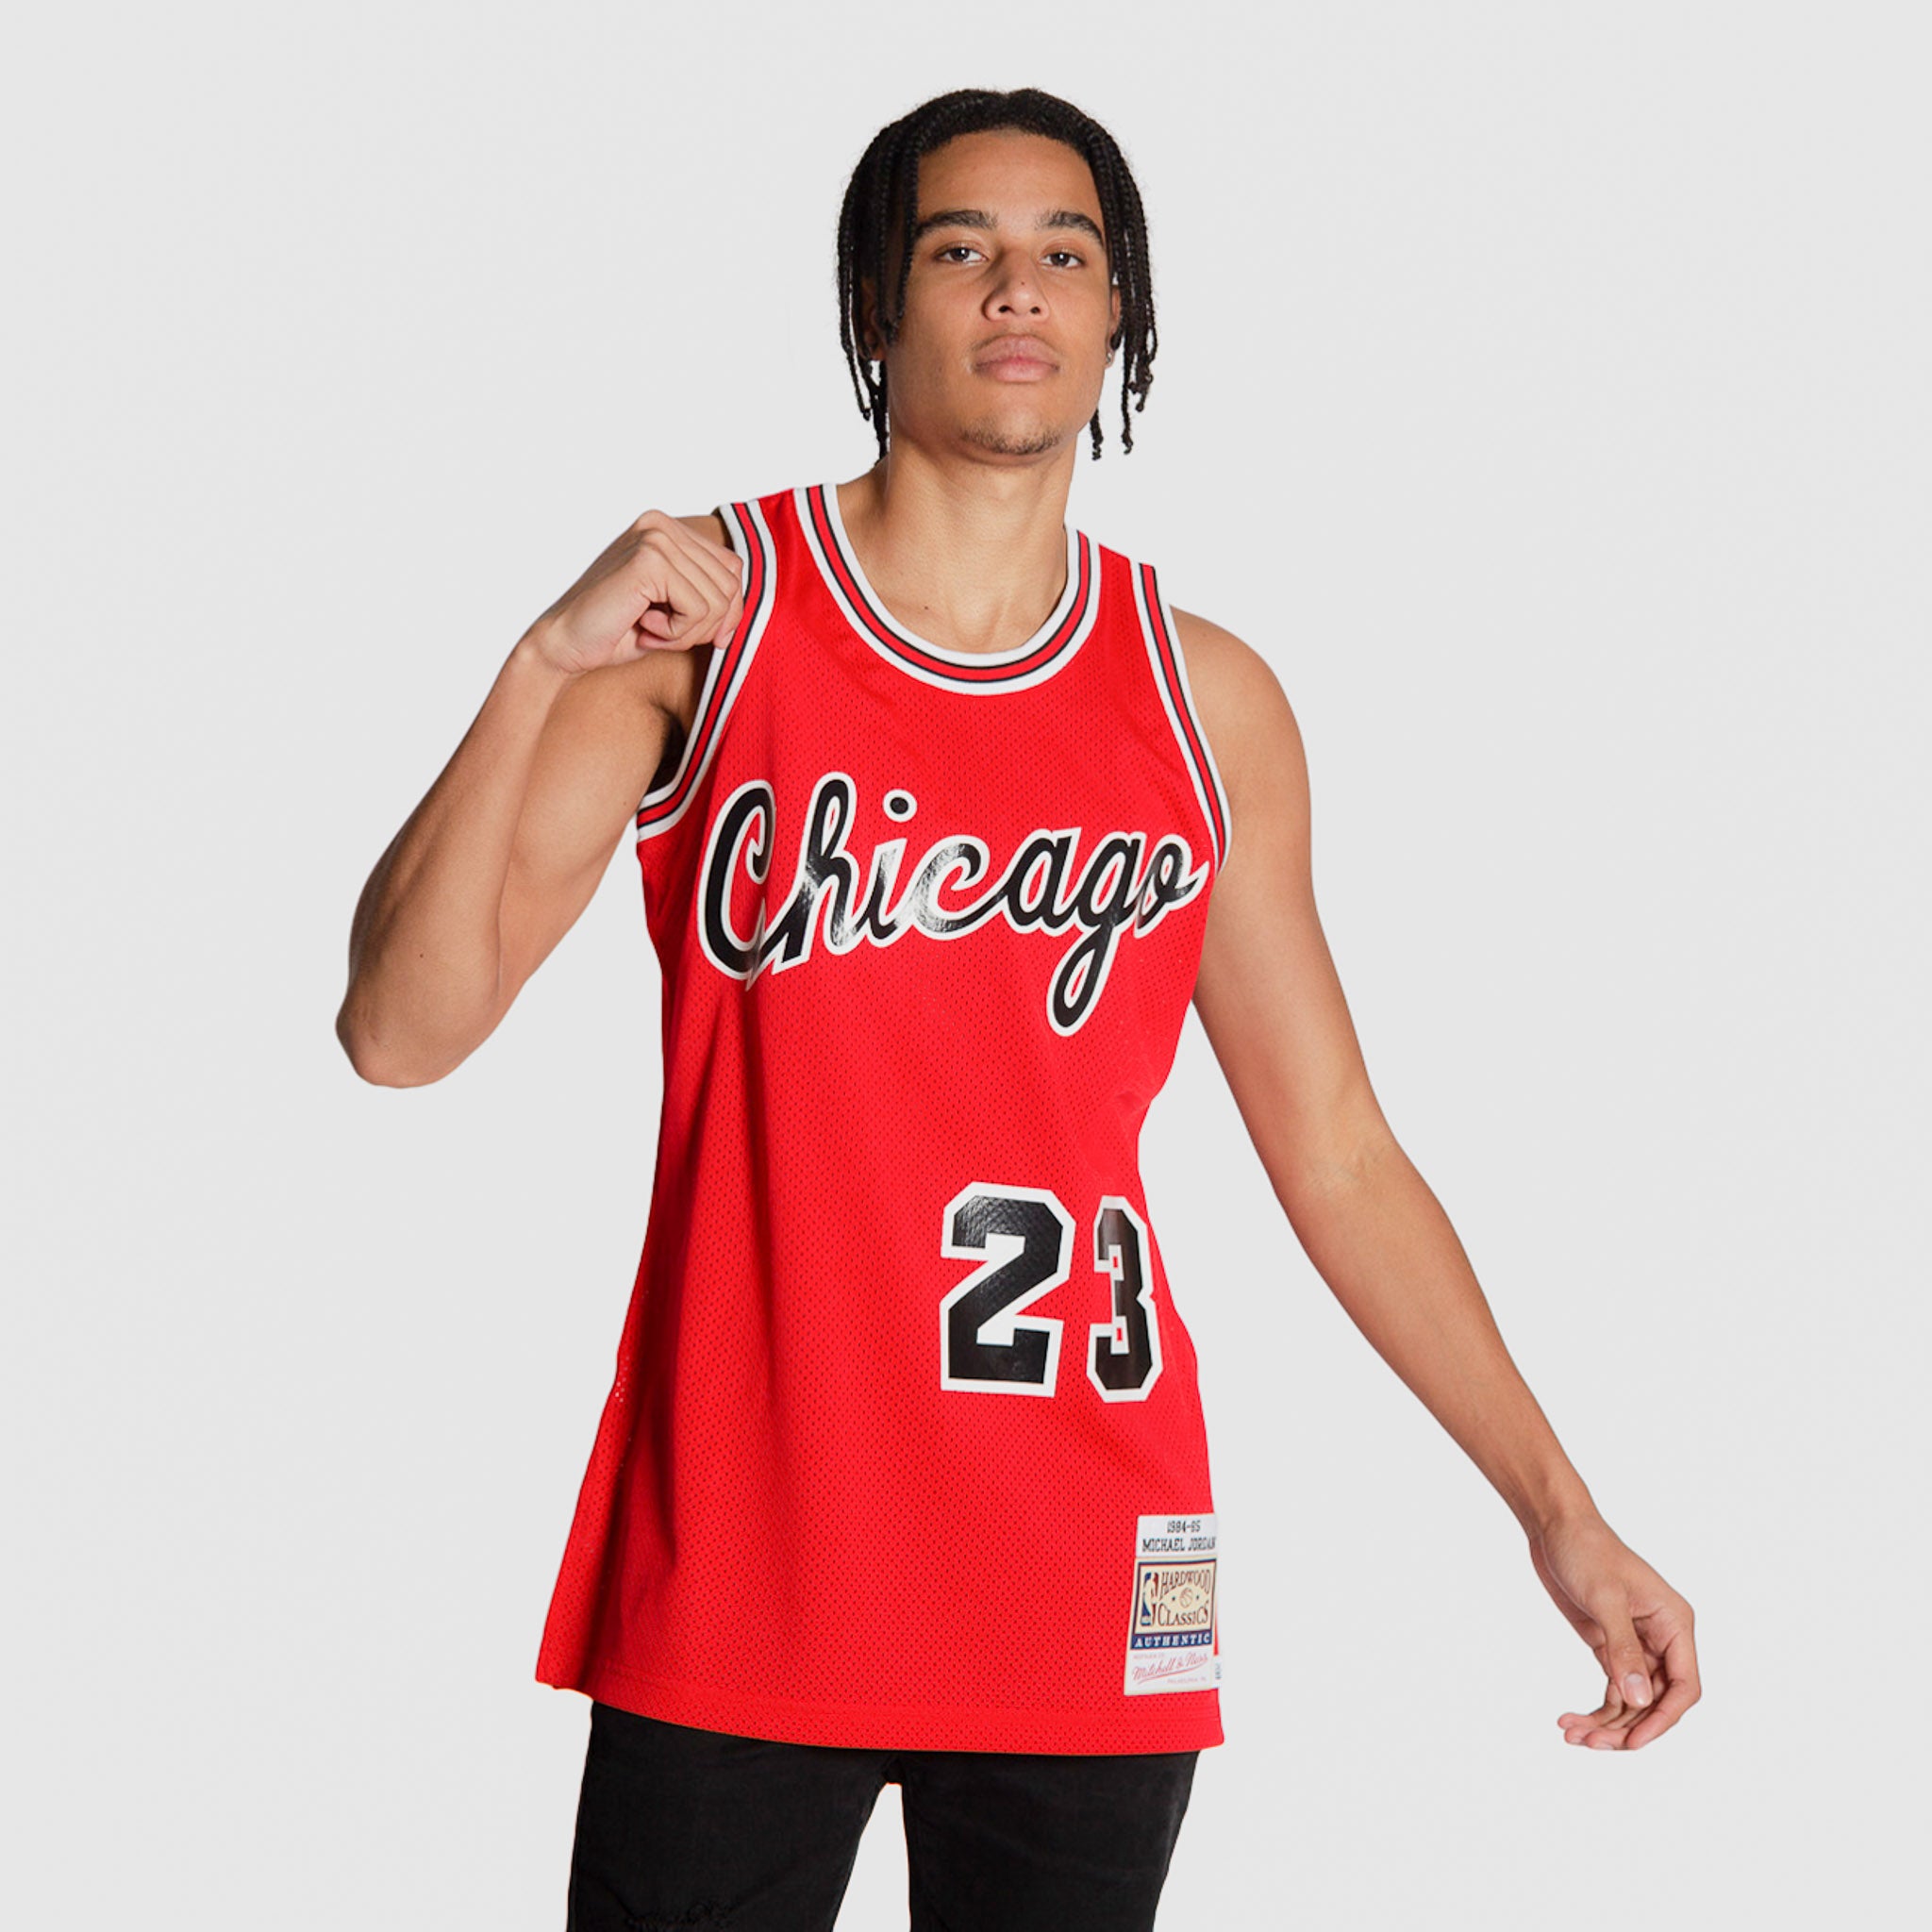 ROOKIE GOAT . Michael Jordan Chicago Bulls Jersey Size 2XL . https